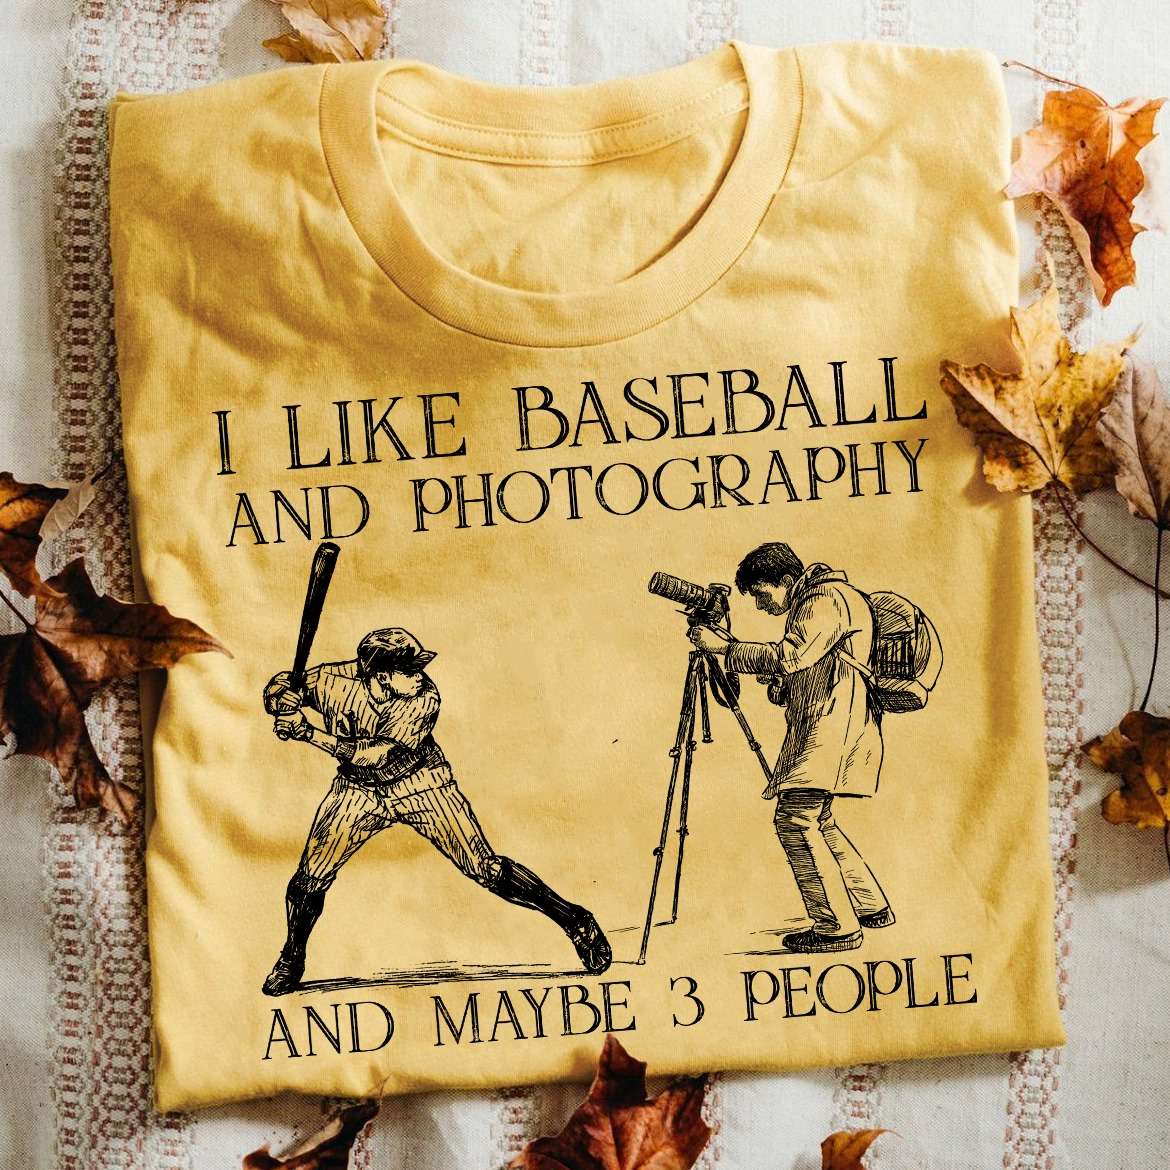 Baseball Photography - I like baseball and photography and maybe 3 people